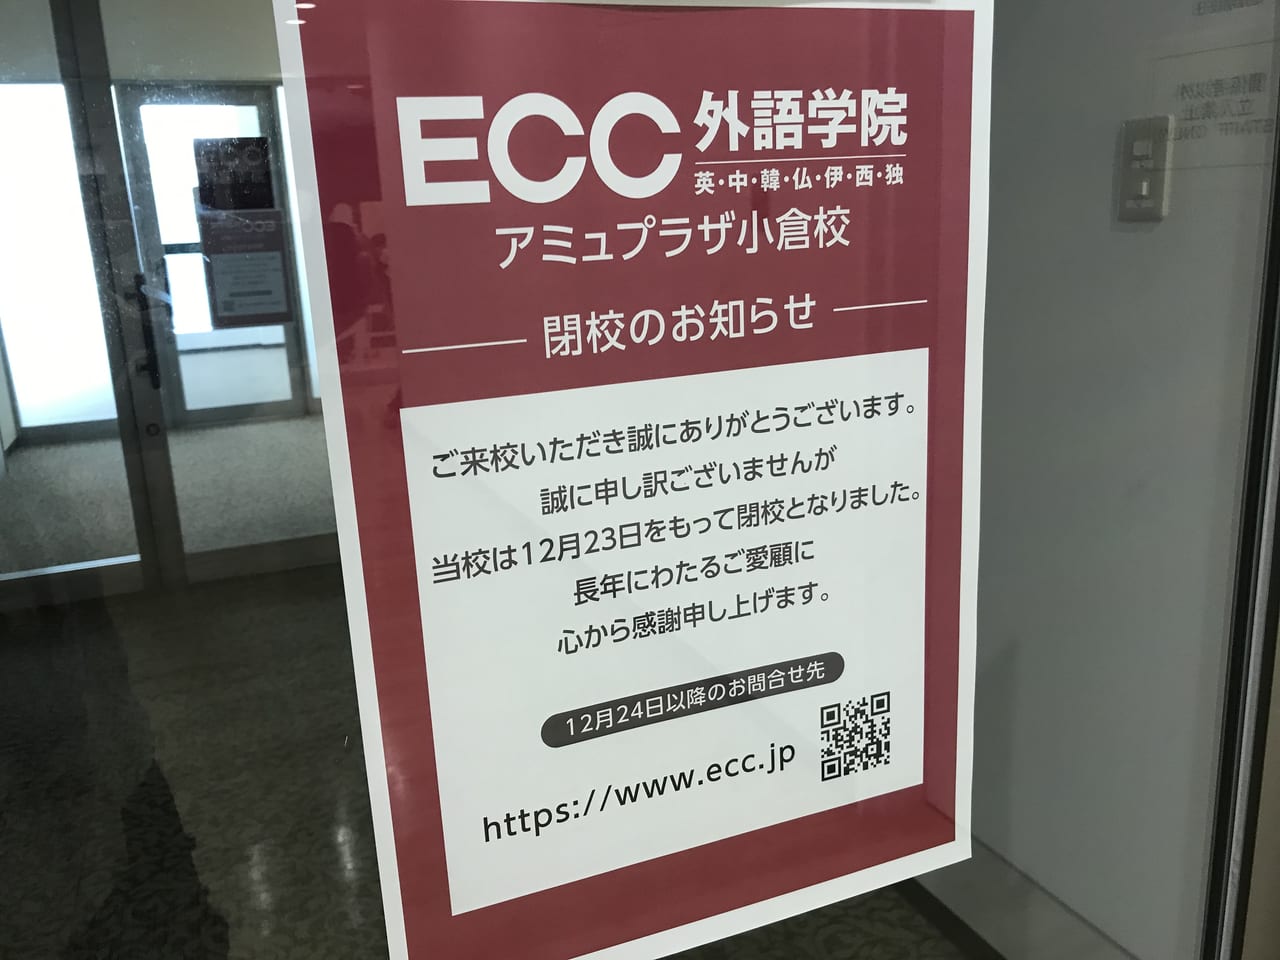 ECC外語学院アミュプラザ小倉校閉校のお知らせ